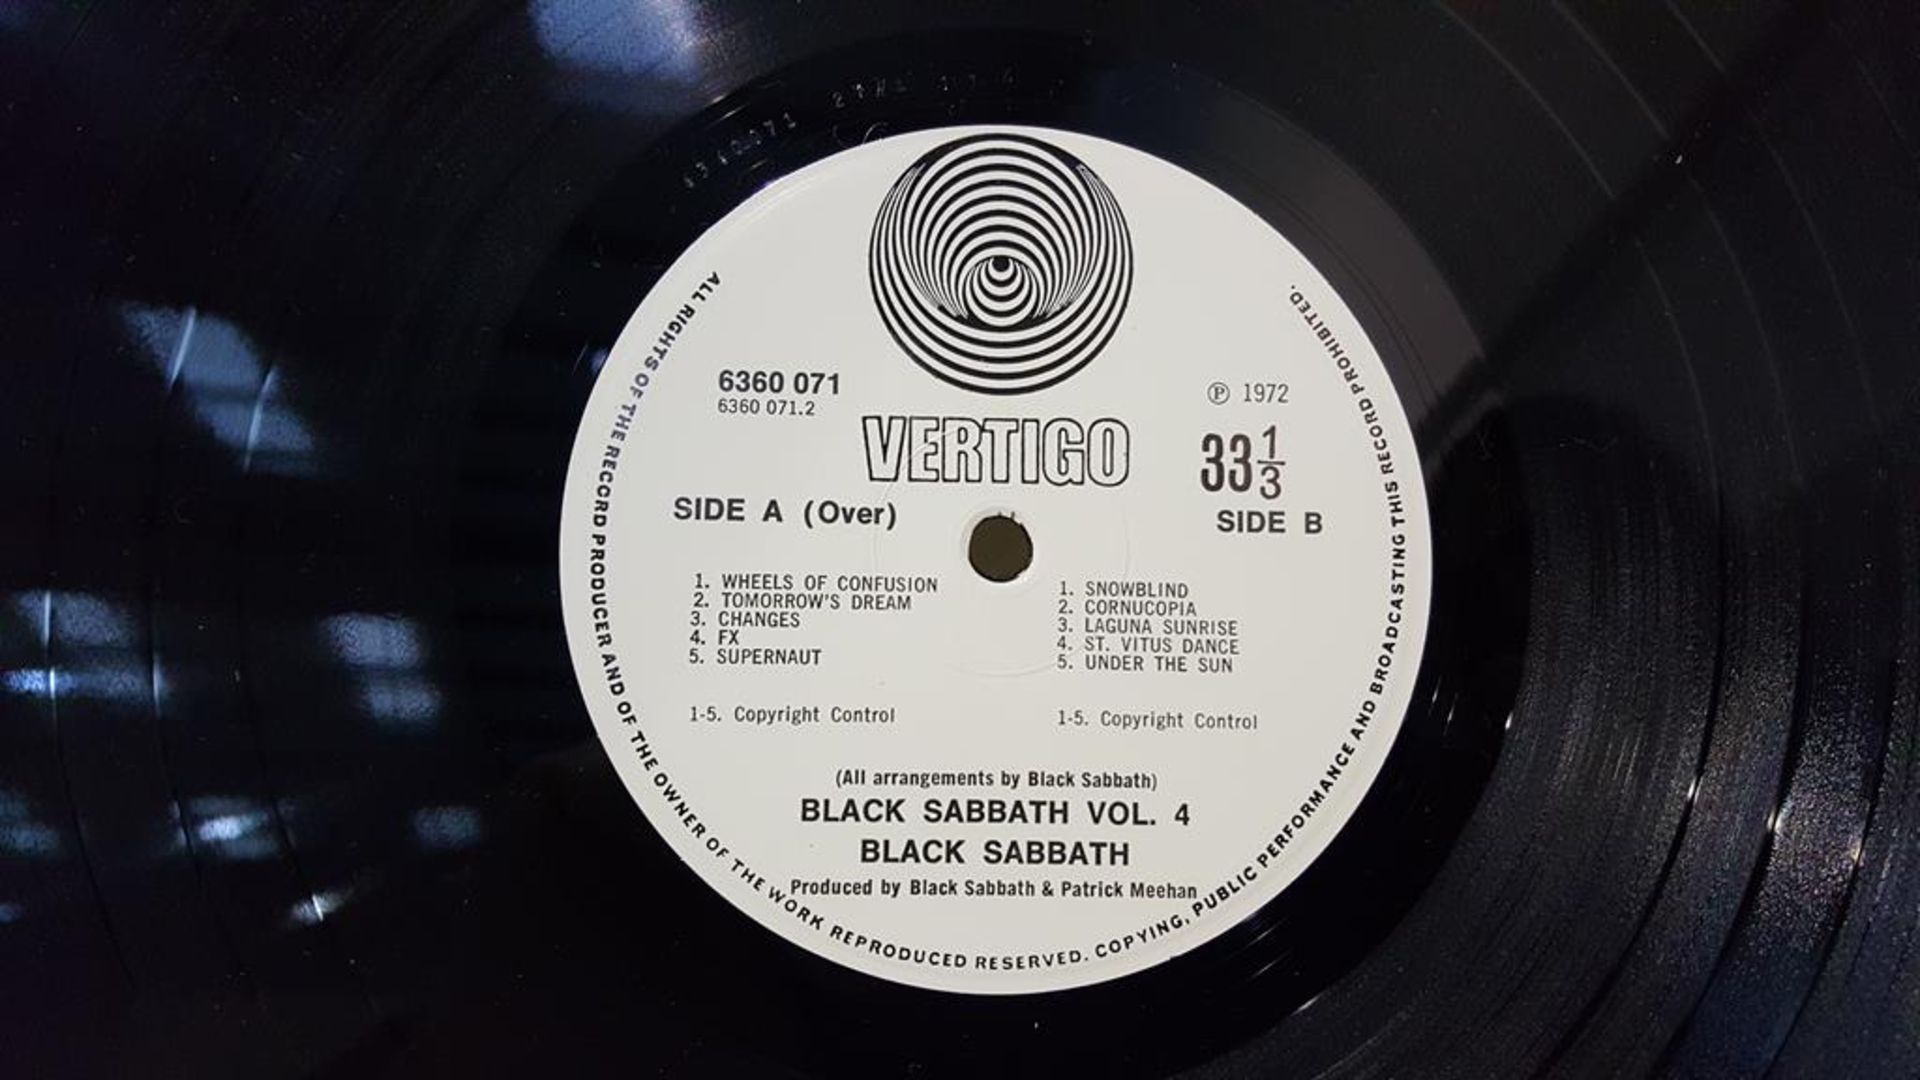 2 x Black Sabbath LPs - Image 11 of 12